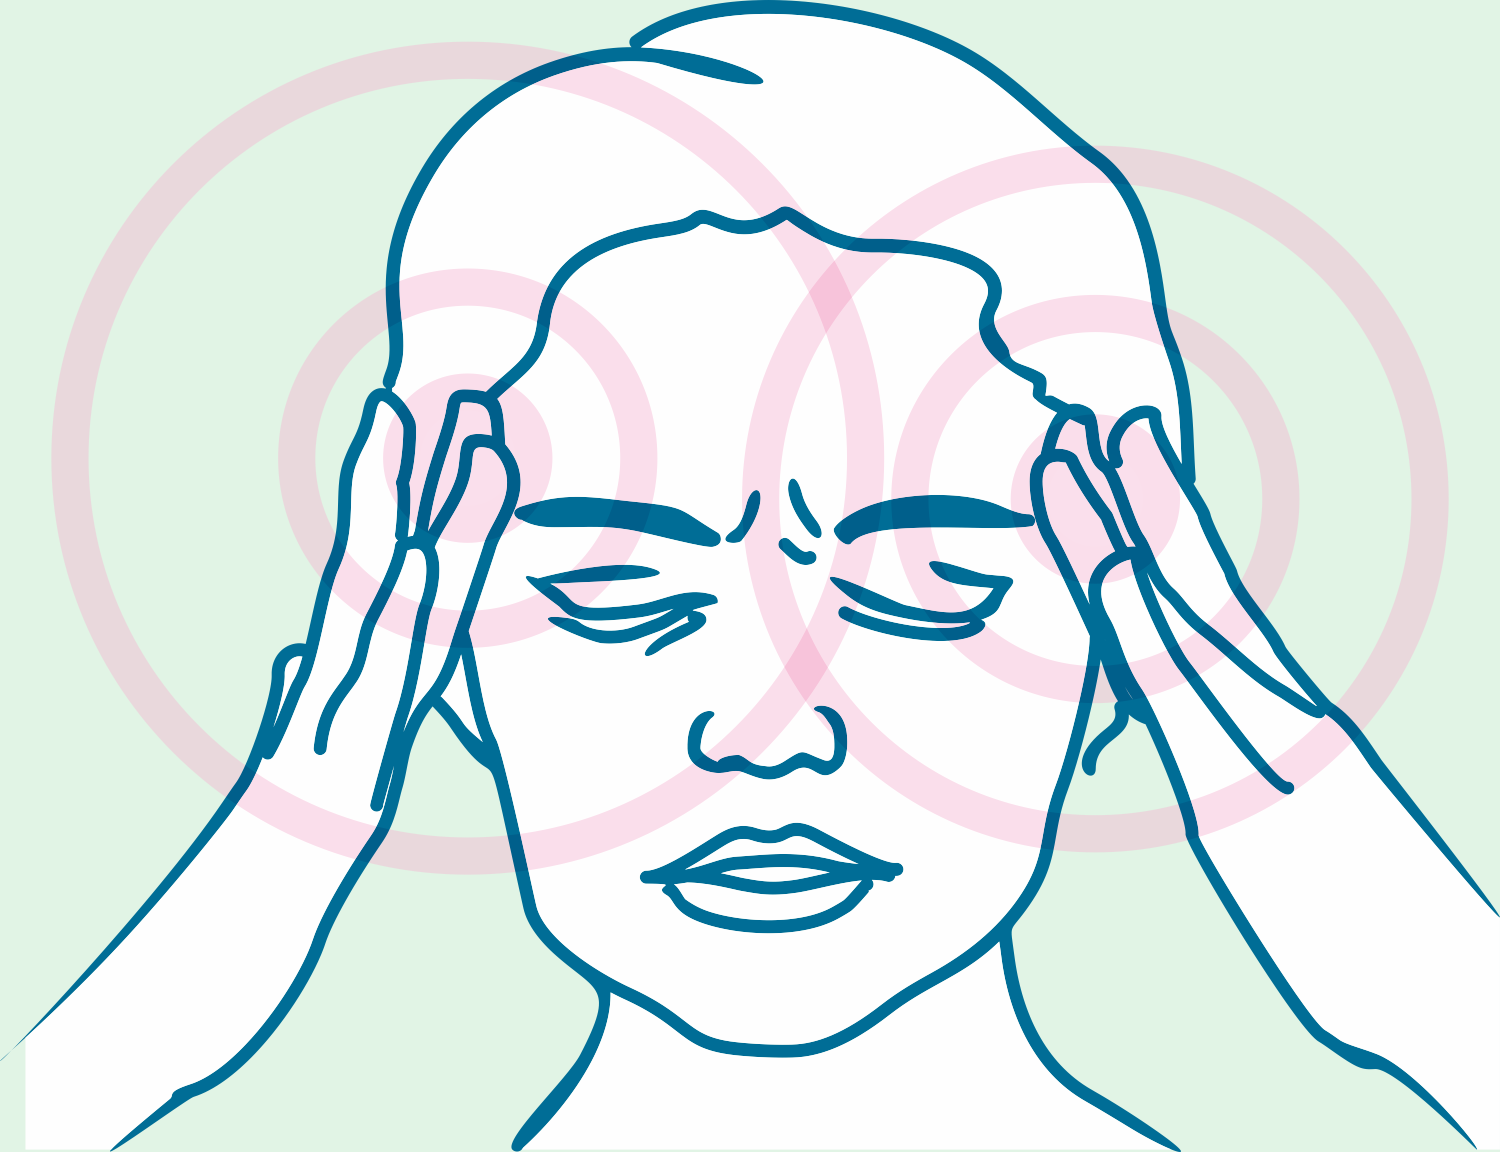 Migraine, pulsating headache, throbbing temples, fatigue